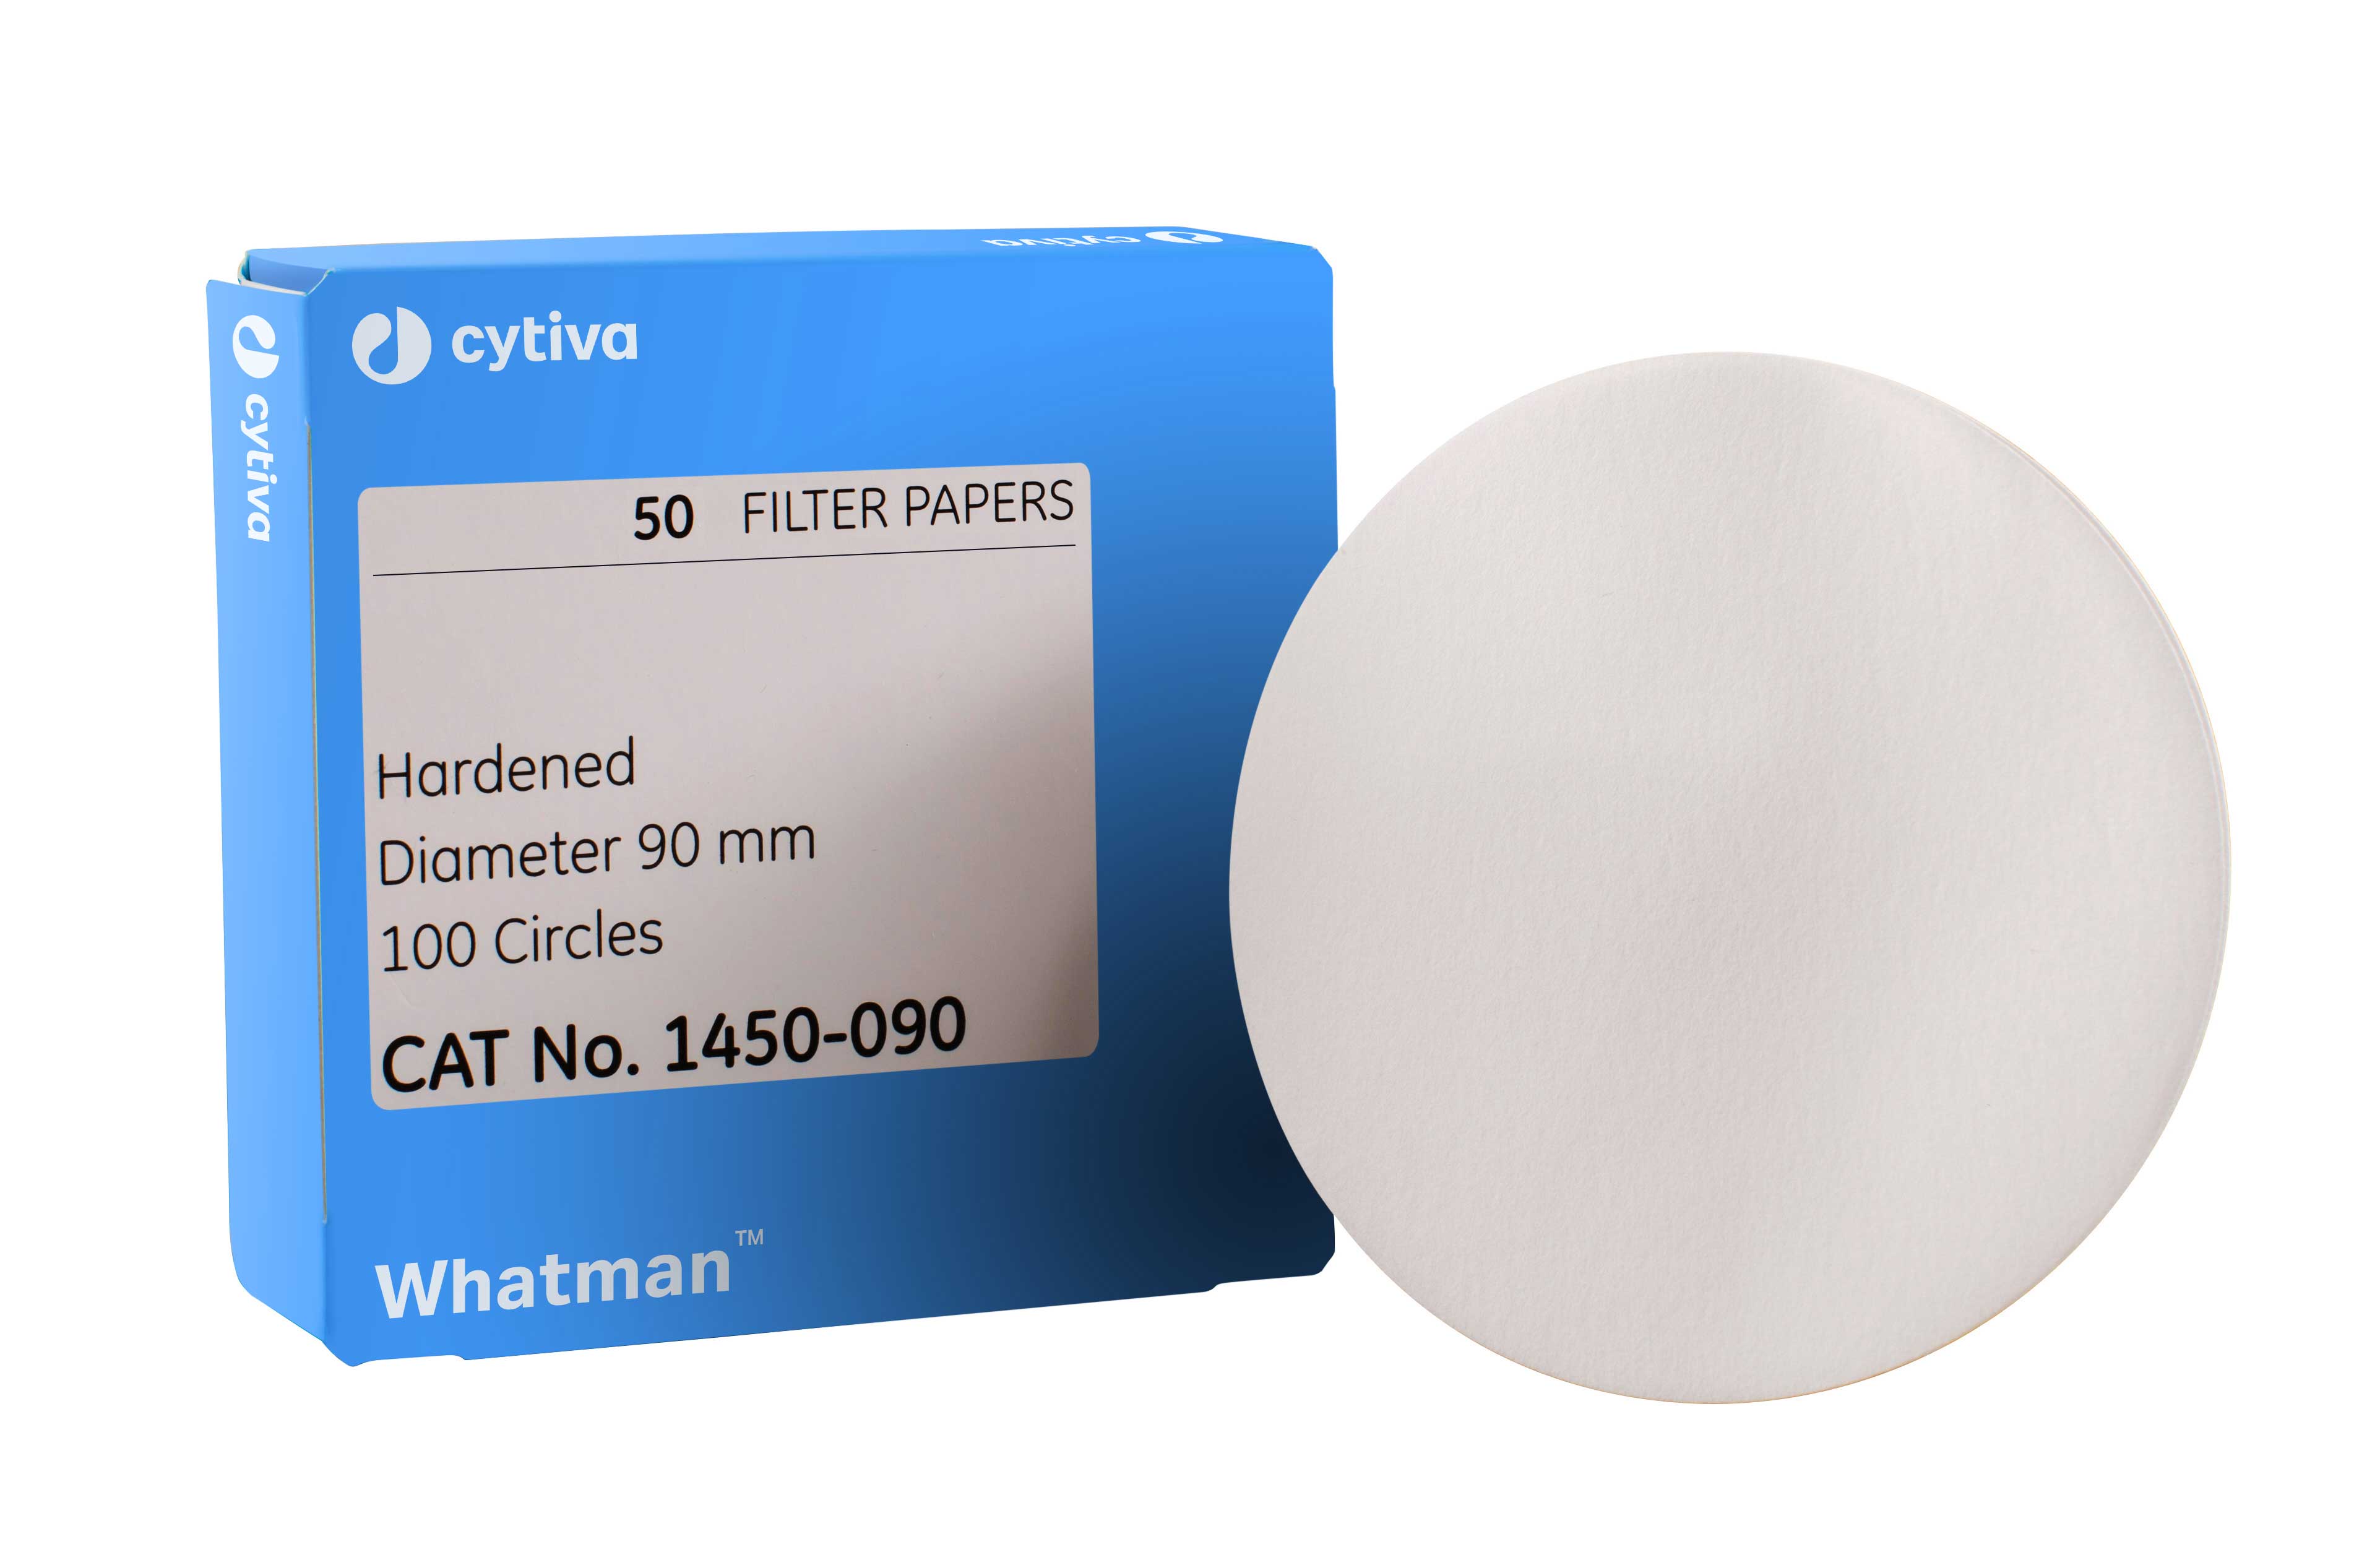 Filtro de papel de celulosa pura. Whatman™ (Cytiva). Disco Grado 50 Celulosa pura sin cenizas. Ø (mm): 240. Retención típica (µm): 2,7